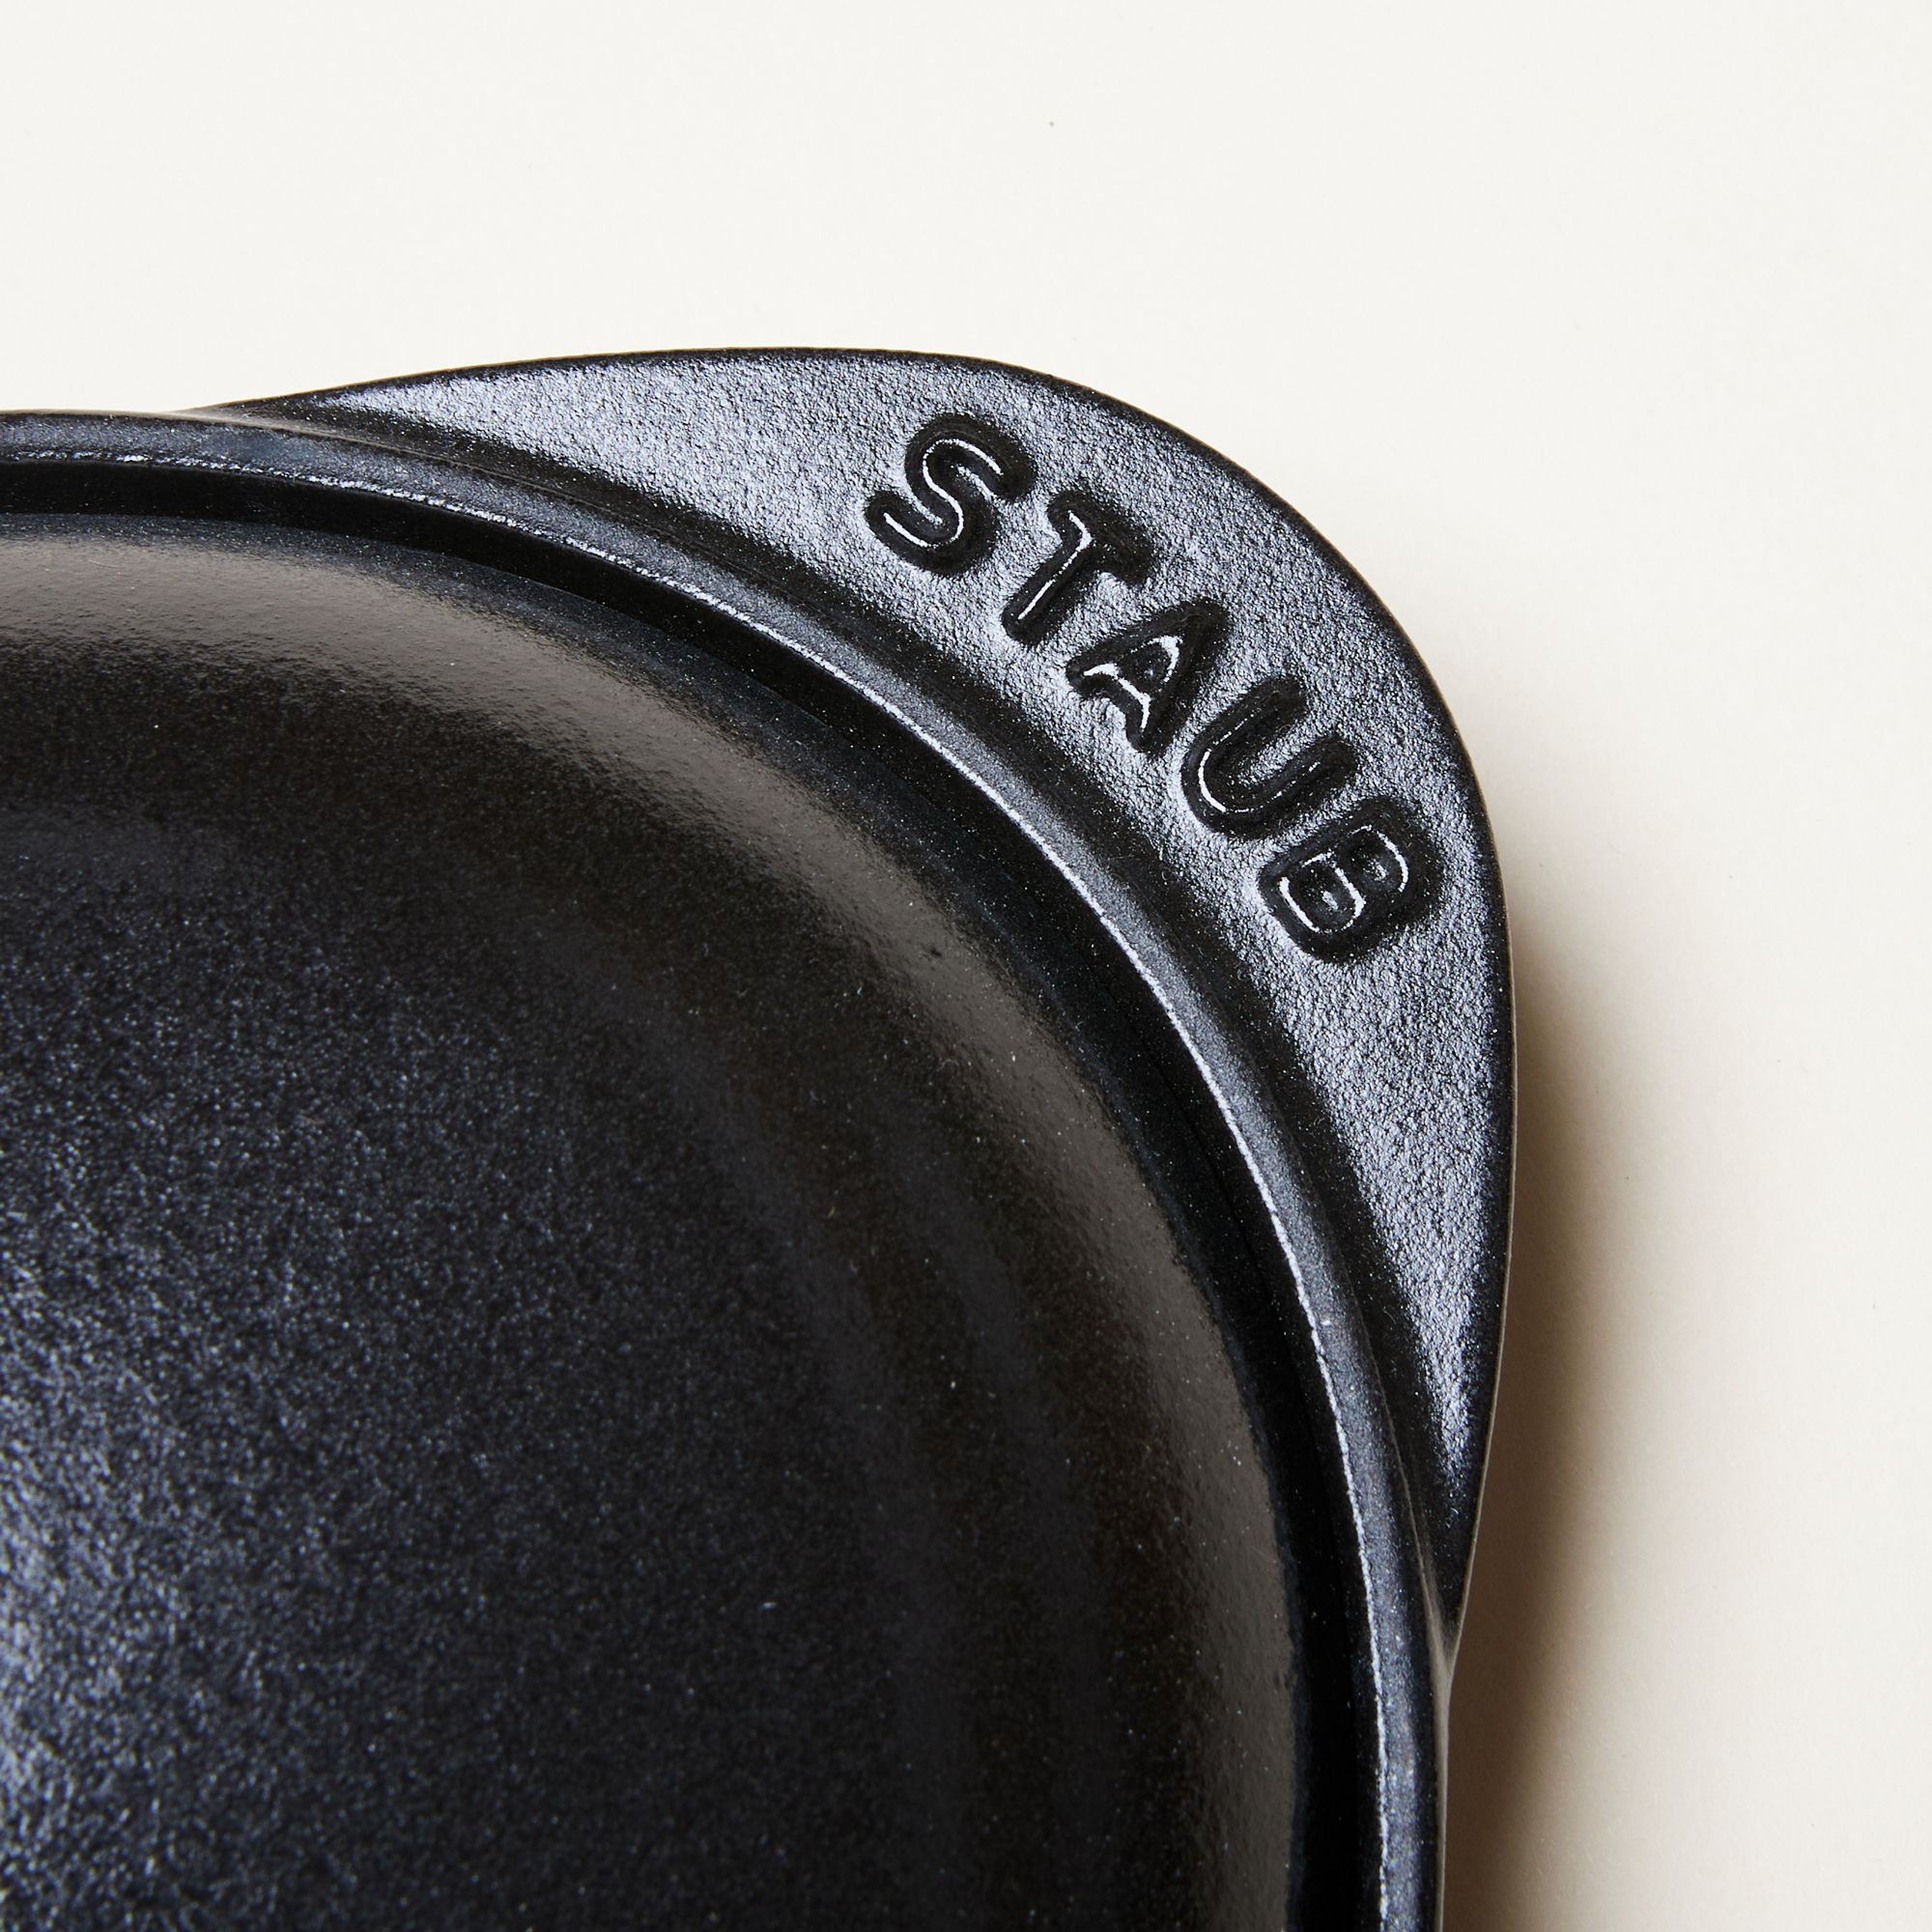 Close up of Staub logo on handle